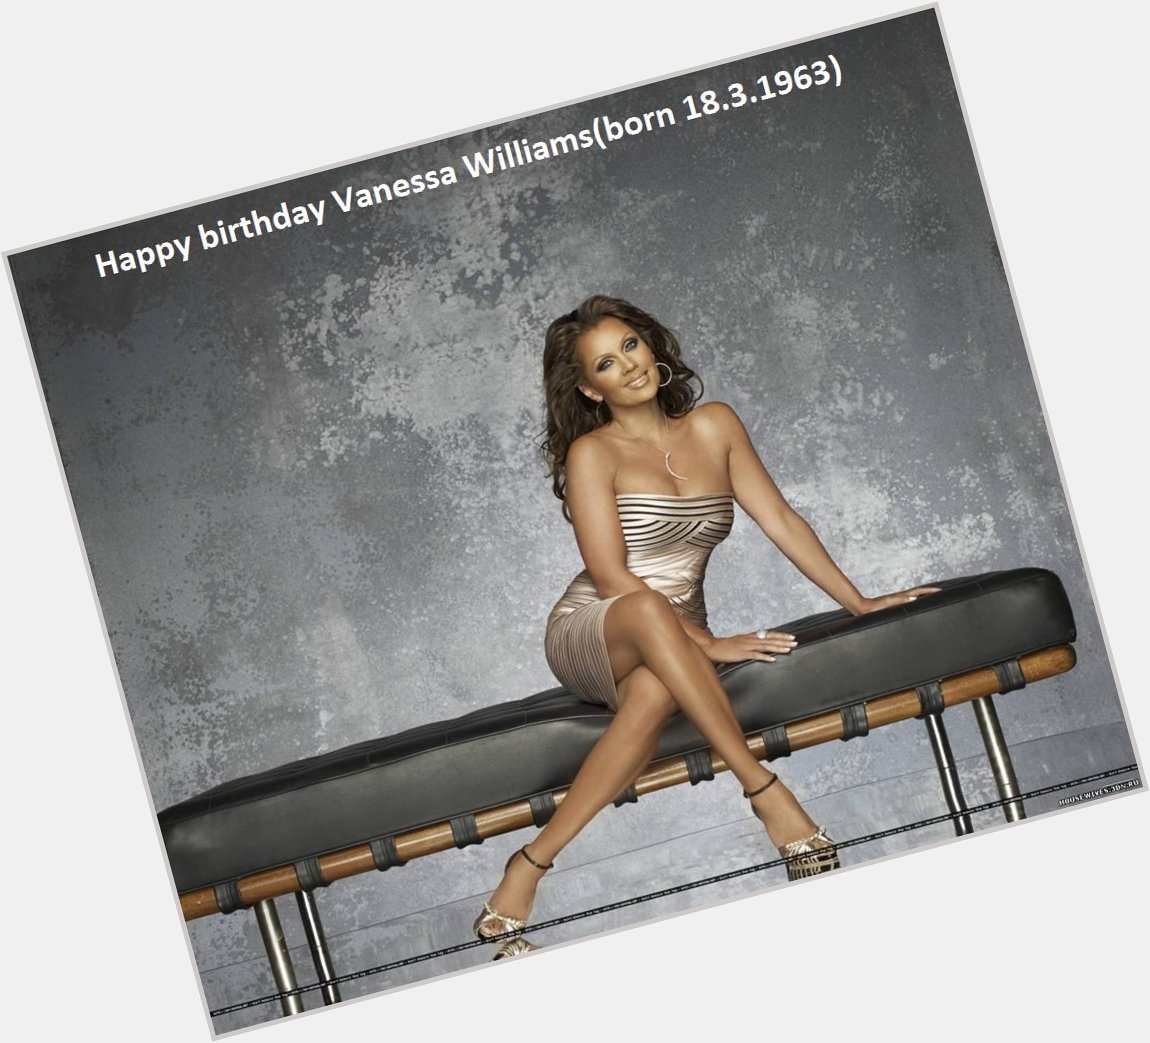 Happy birthday Vanessa Williams(born 18.3.1963)  